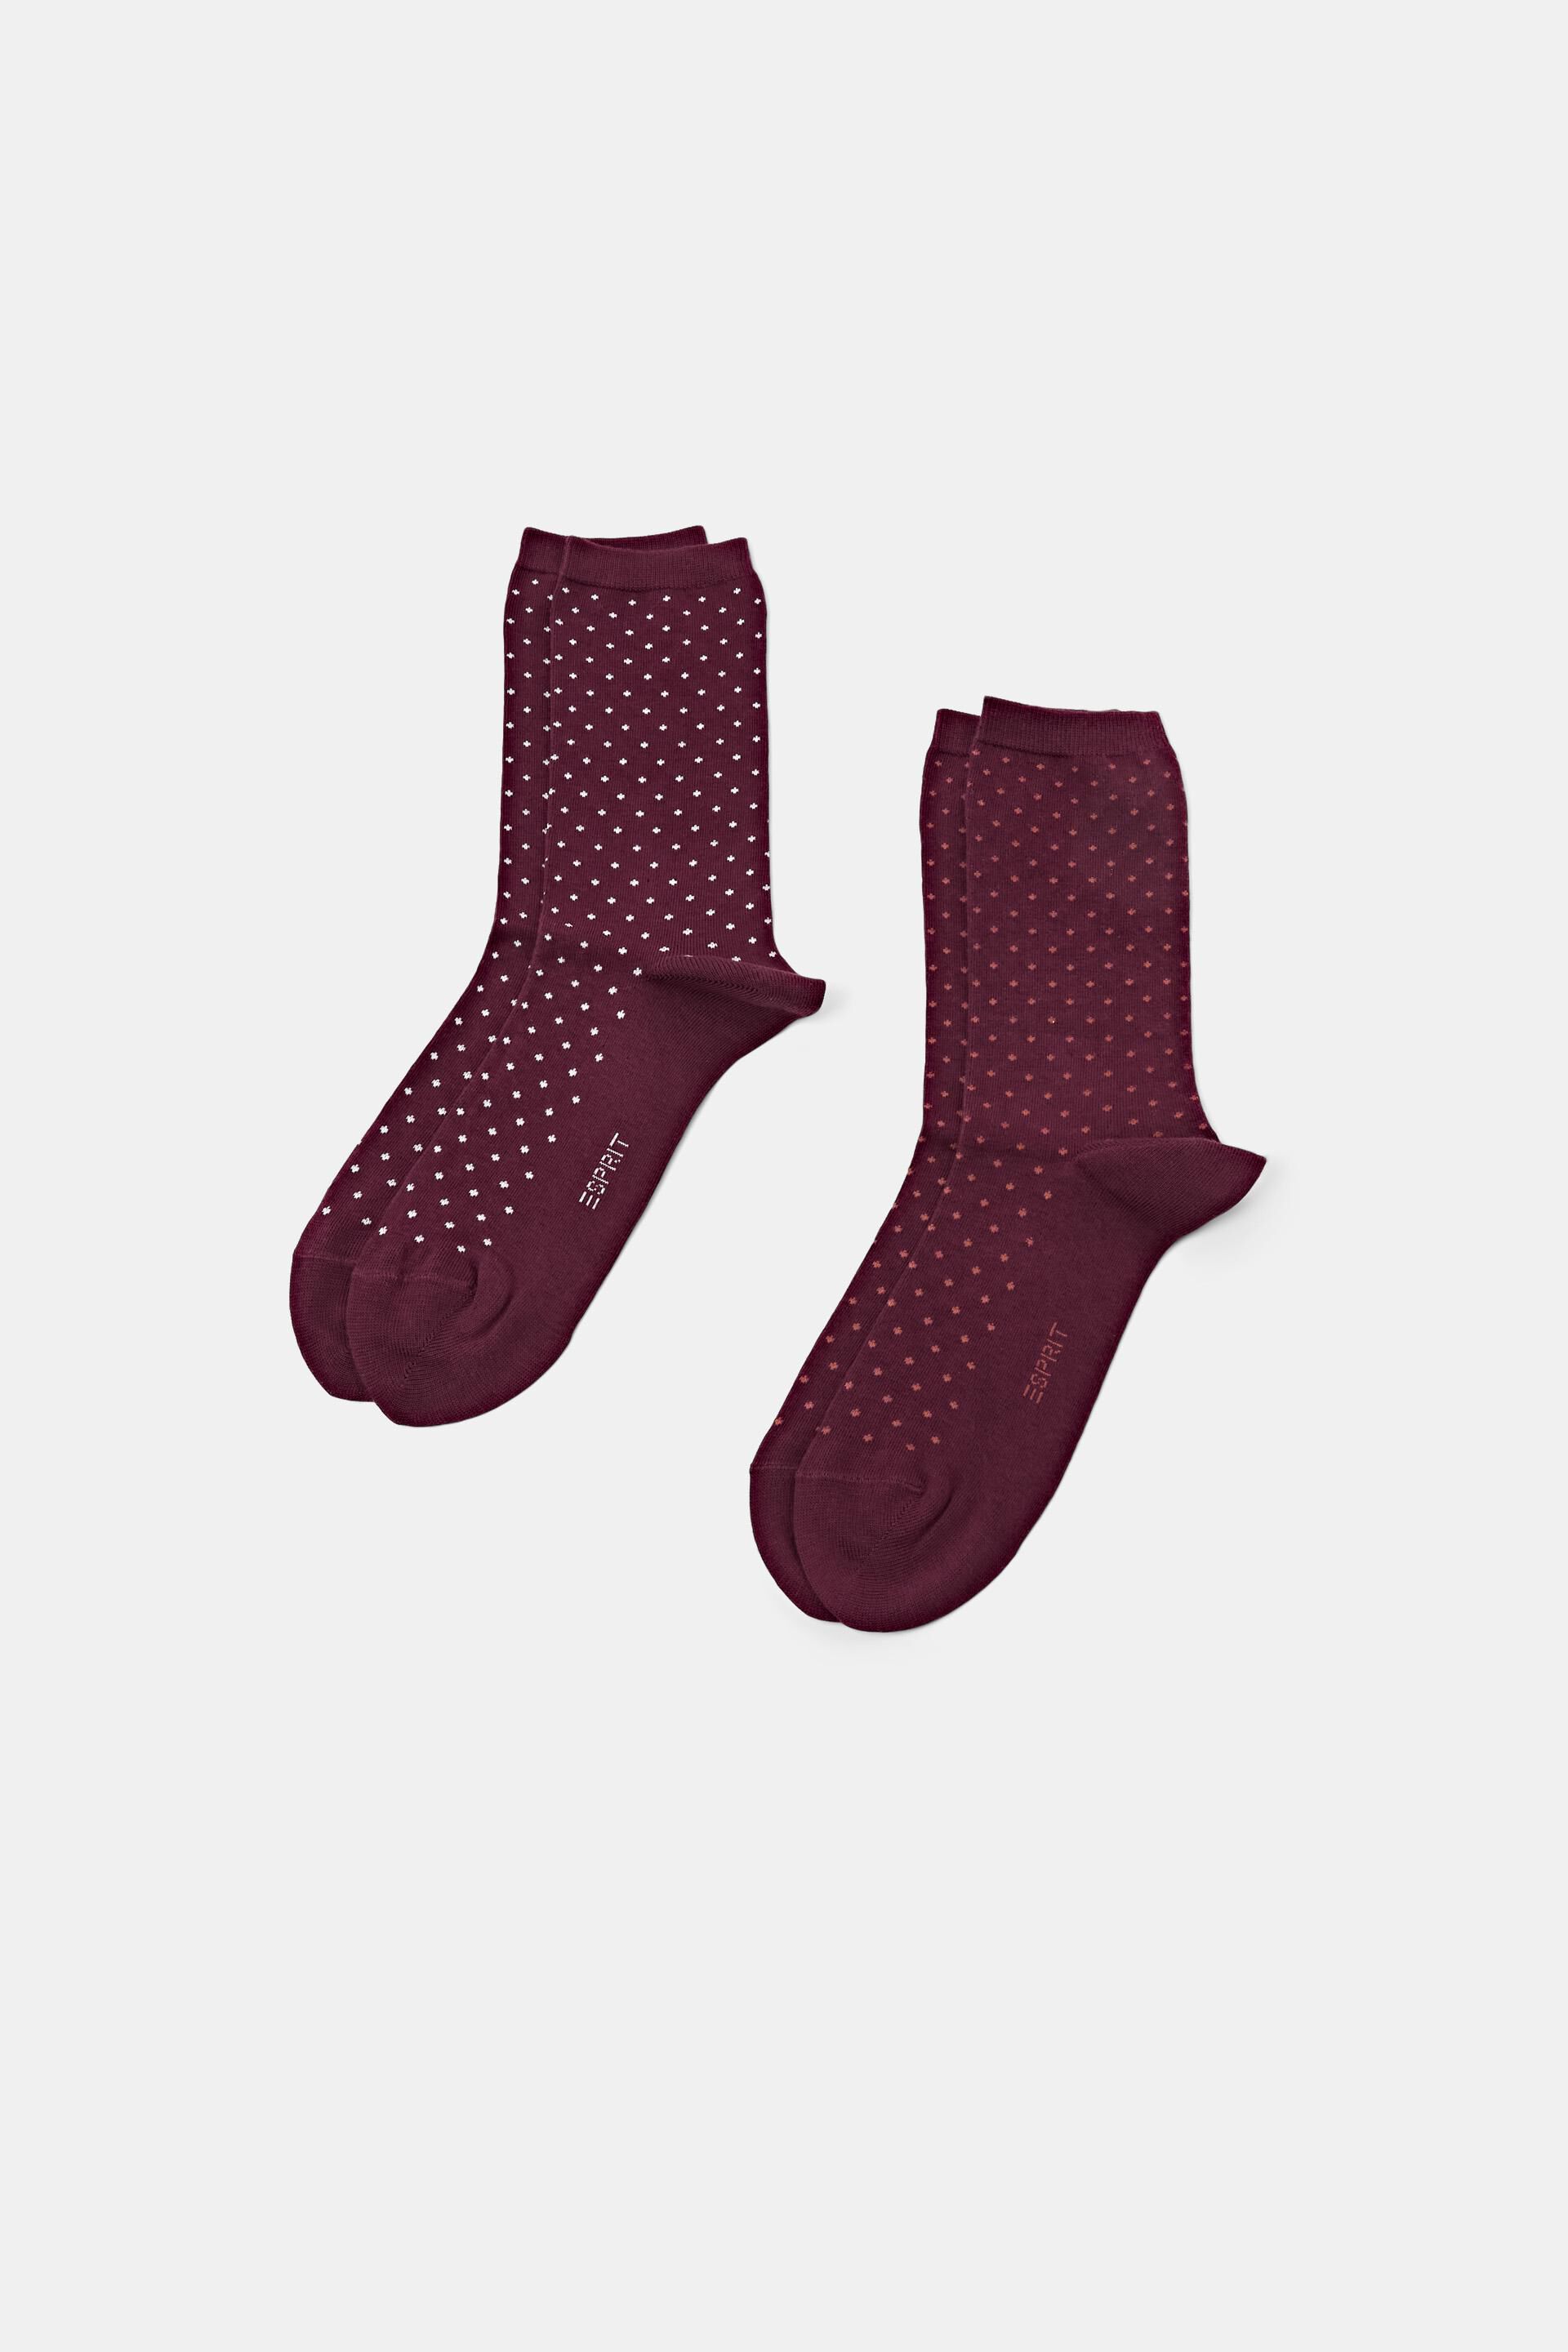 Esprit Online Store 2-pack of polka dot socks, organic cotton